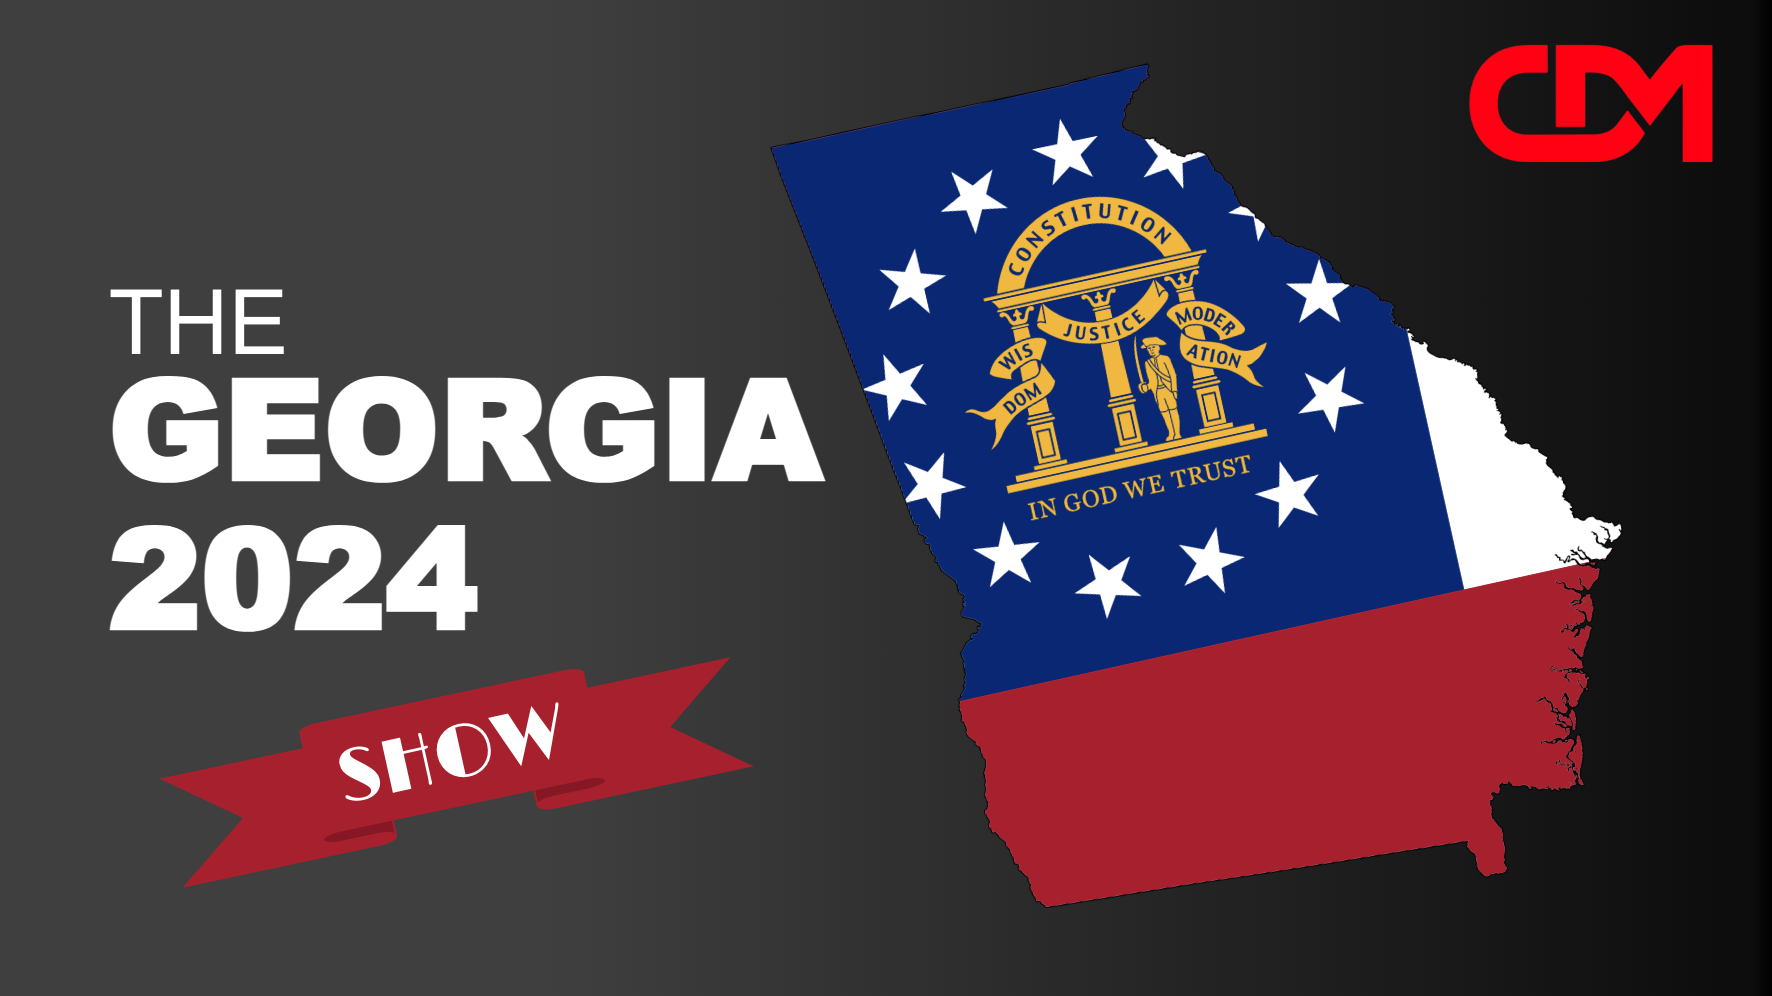 L Todd Wood, Bill Quinn, The Georgia 2024 Show, emergency broadcast, Michael Whatley, NC, GOP, Donald Trump